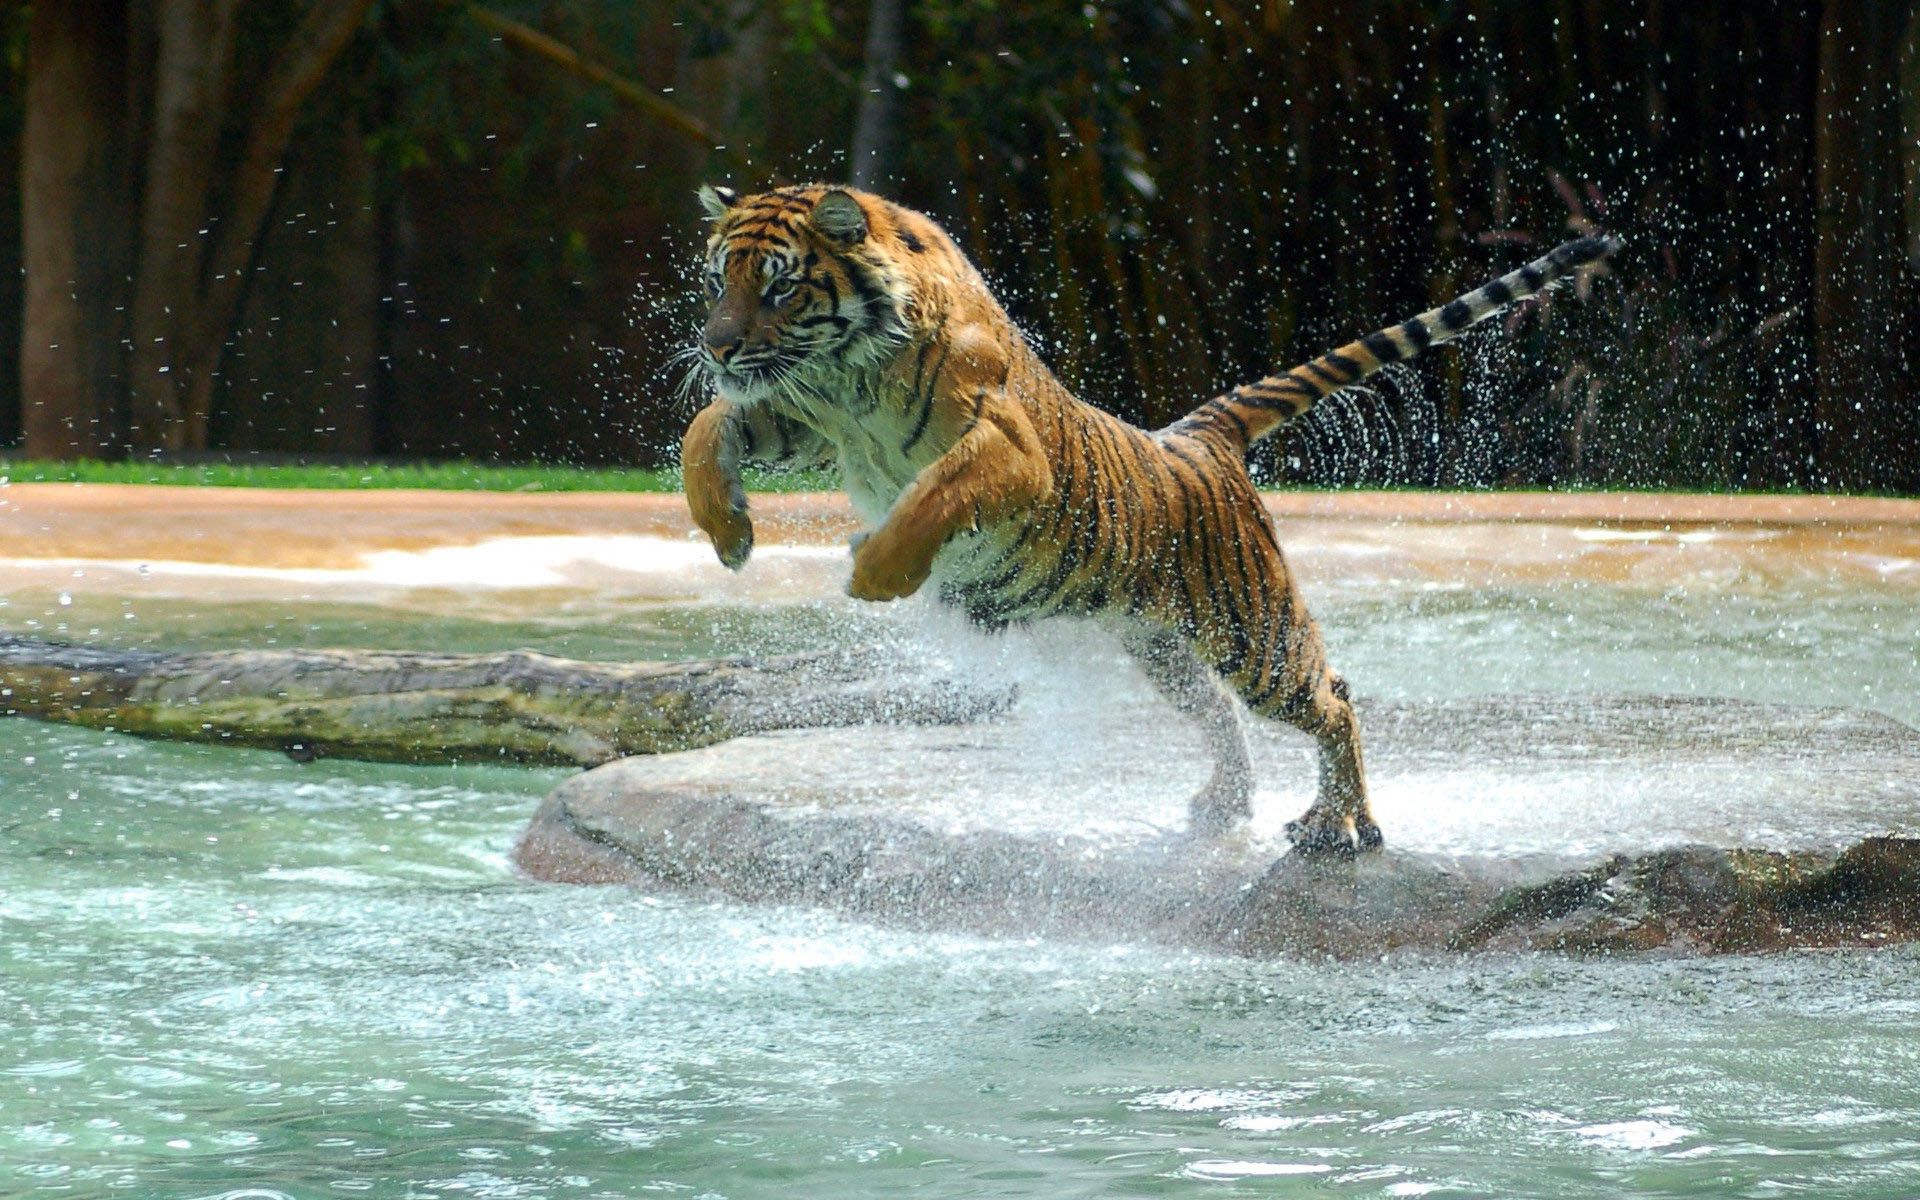 140185 descargar imagen rociar, animales, agua, tigre, rebotar, saltar: fondos de pantalla y protectores de pantalla gratis